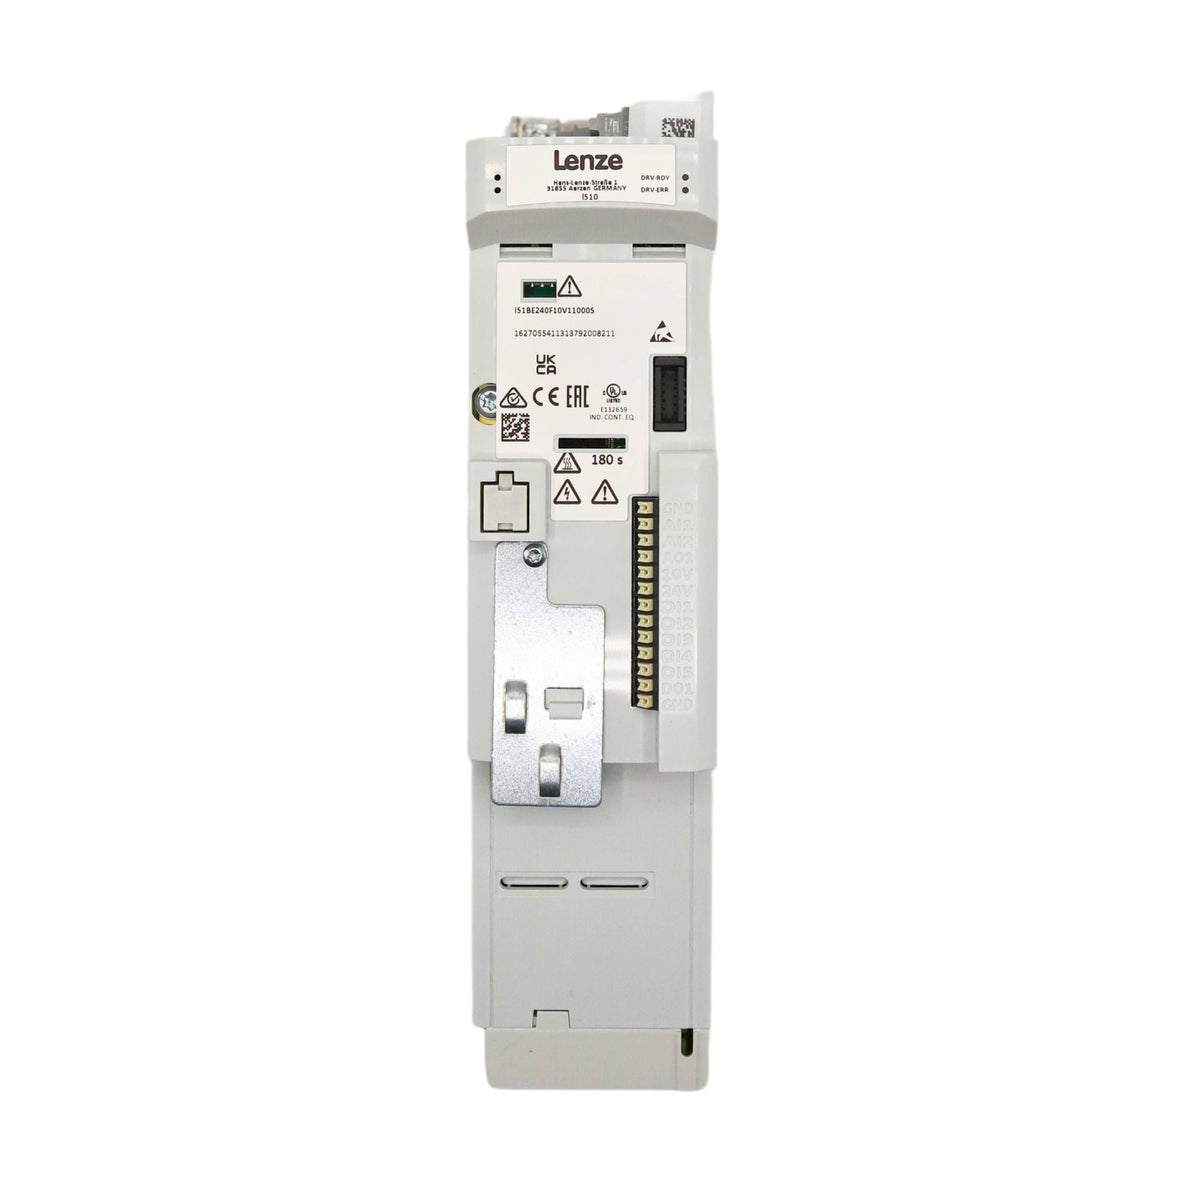 Lenze | i510 5hp Cabinet mount 480volt 5digital inputs, 2 analog inputs, 1 digital output 1 analog Output, 1 relay | I51BE240F10V11000S - front view